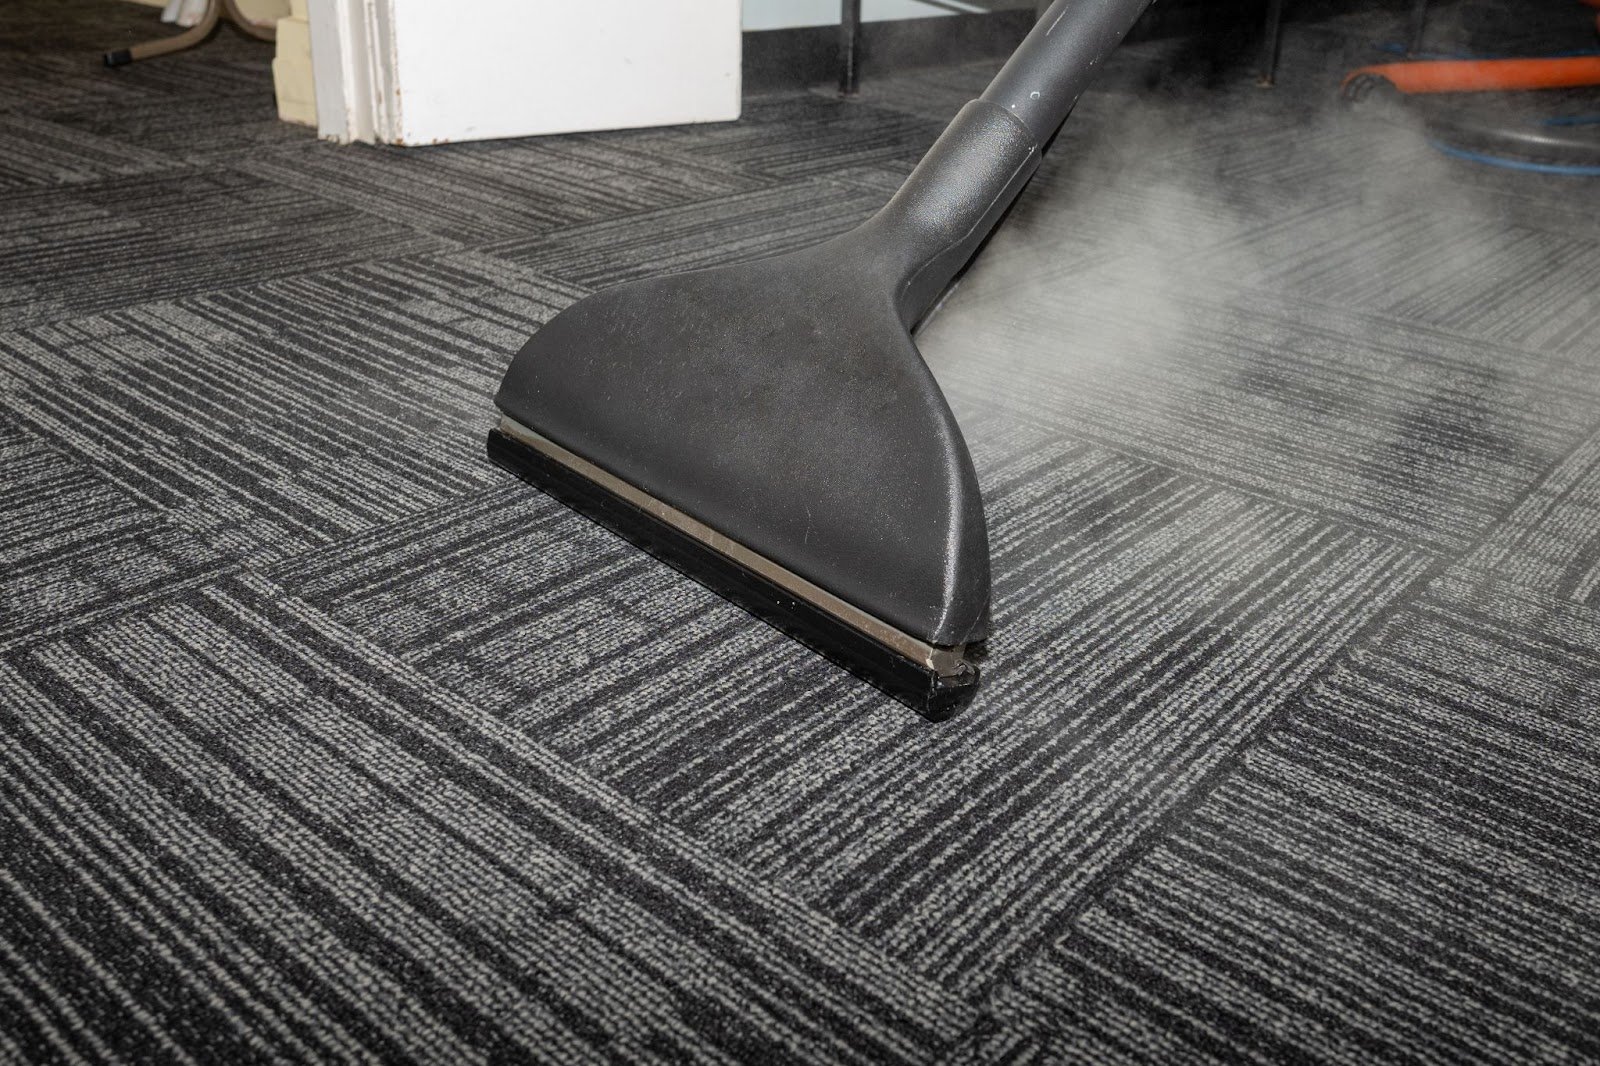 Steaming a gray carpet.